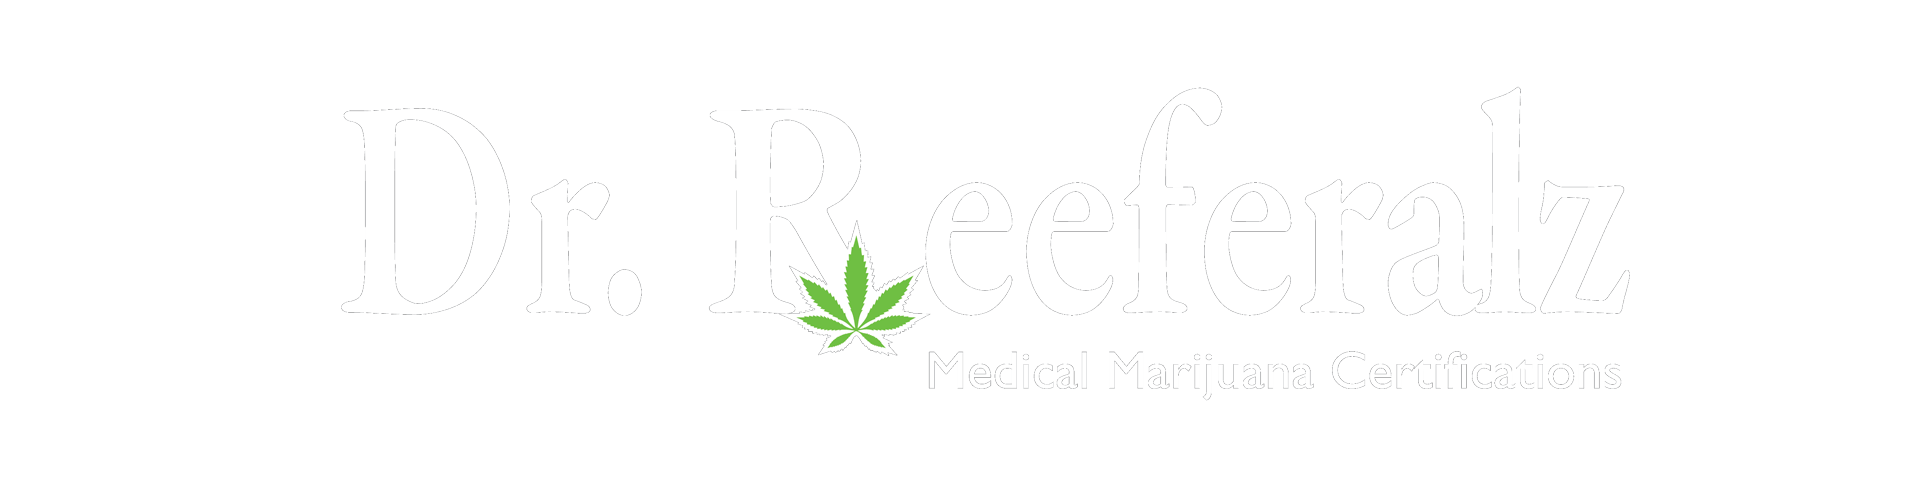 Dr. Reeferalz